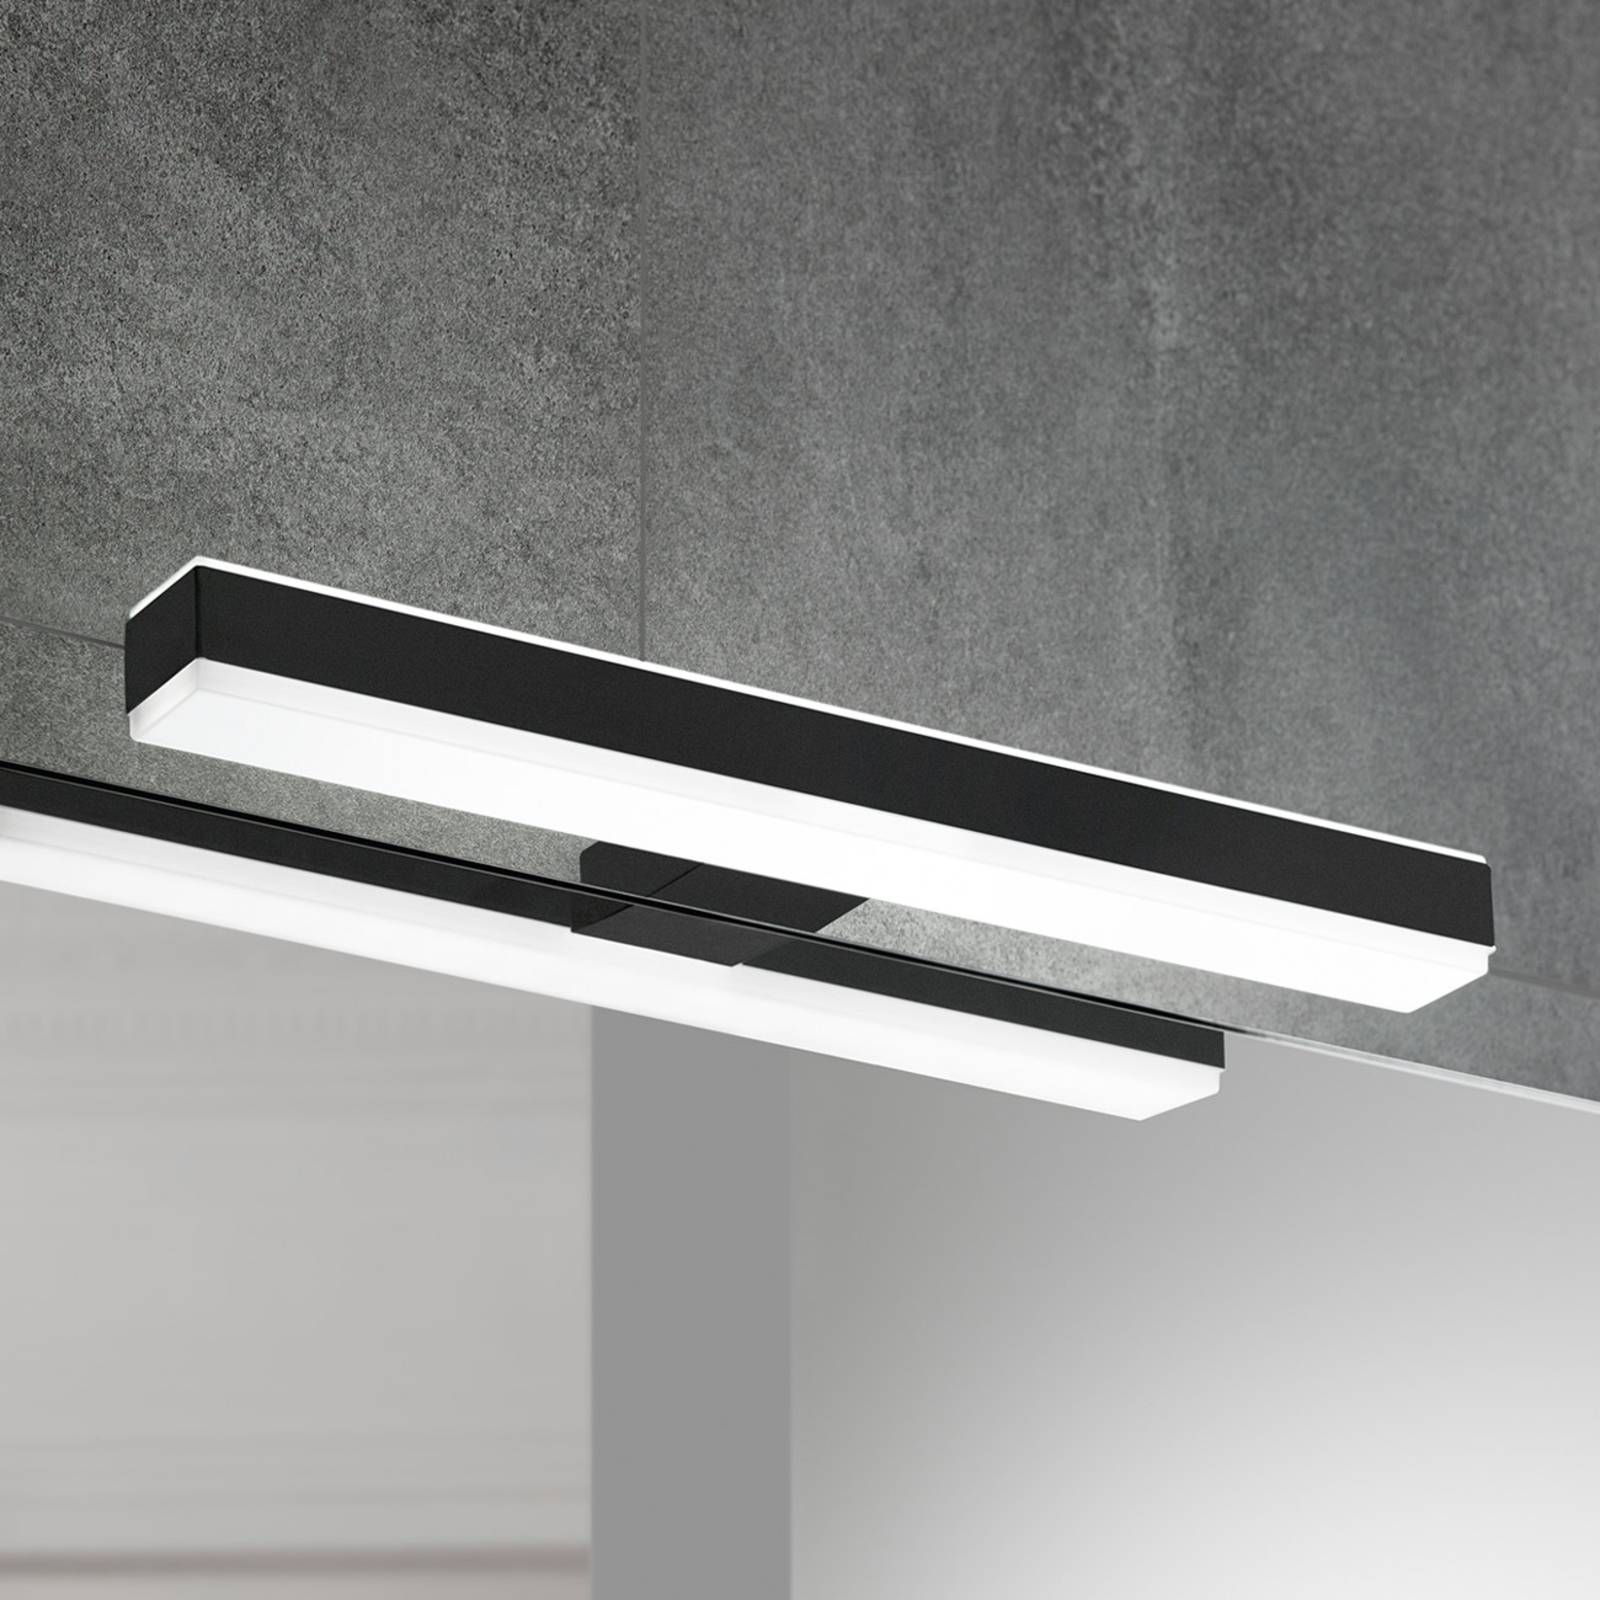 Ebir Zrkadlové LED svietidlo Veronica šírka 30cm čierna, Kúpeľňa, plast, polykarbonát, 8W, L: 30 cm, K: 3.8cm